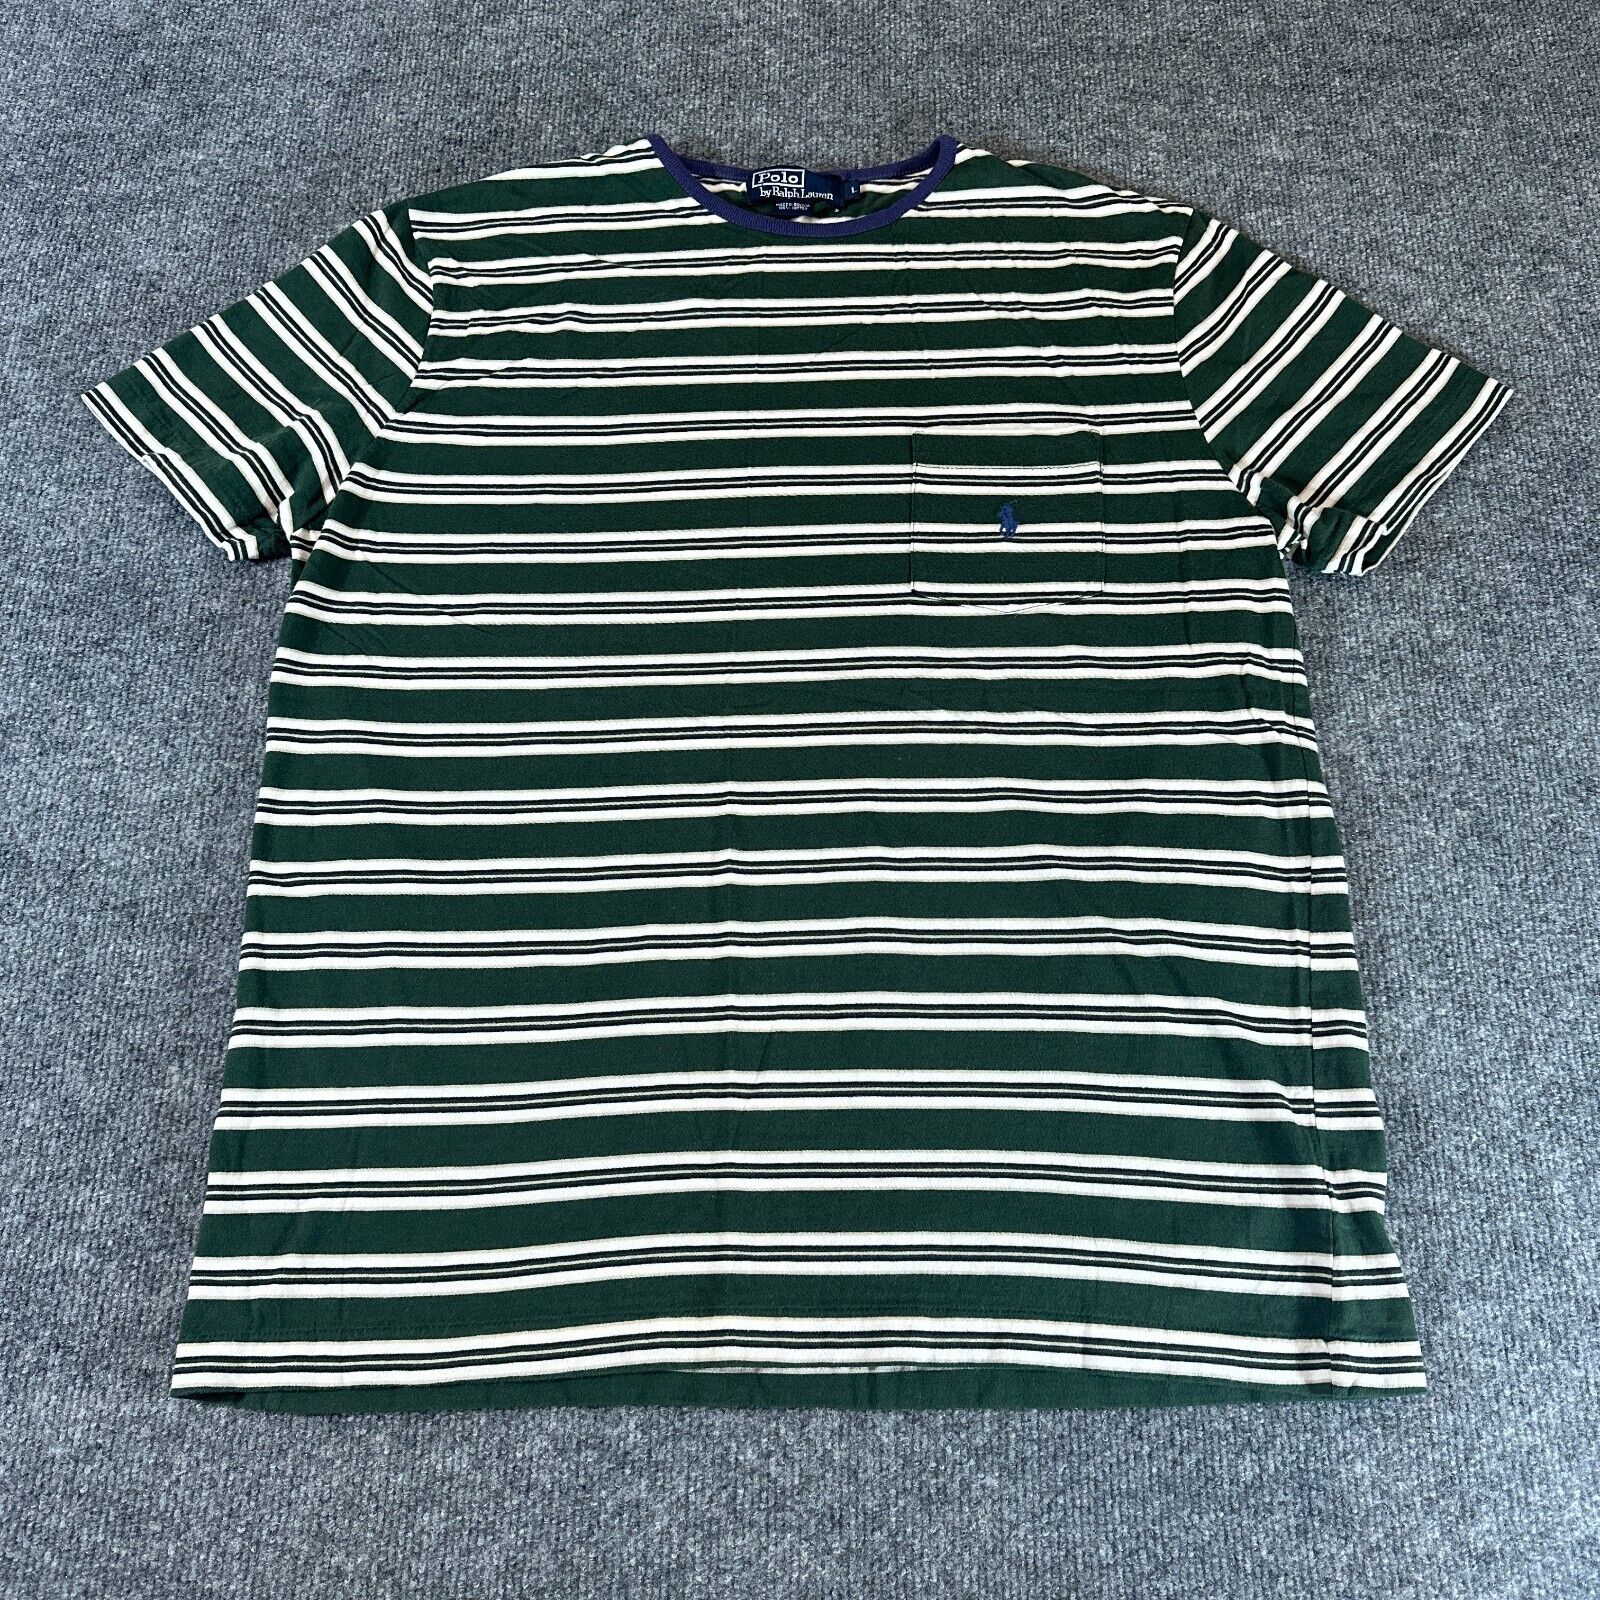 VINTAGE Polo Ralph Lauren Shirt Mens Large Green Striped 90s Grunge T-Shirt L